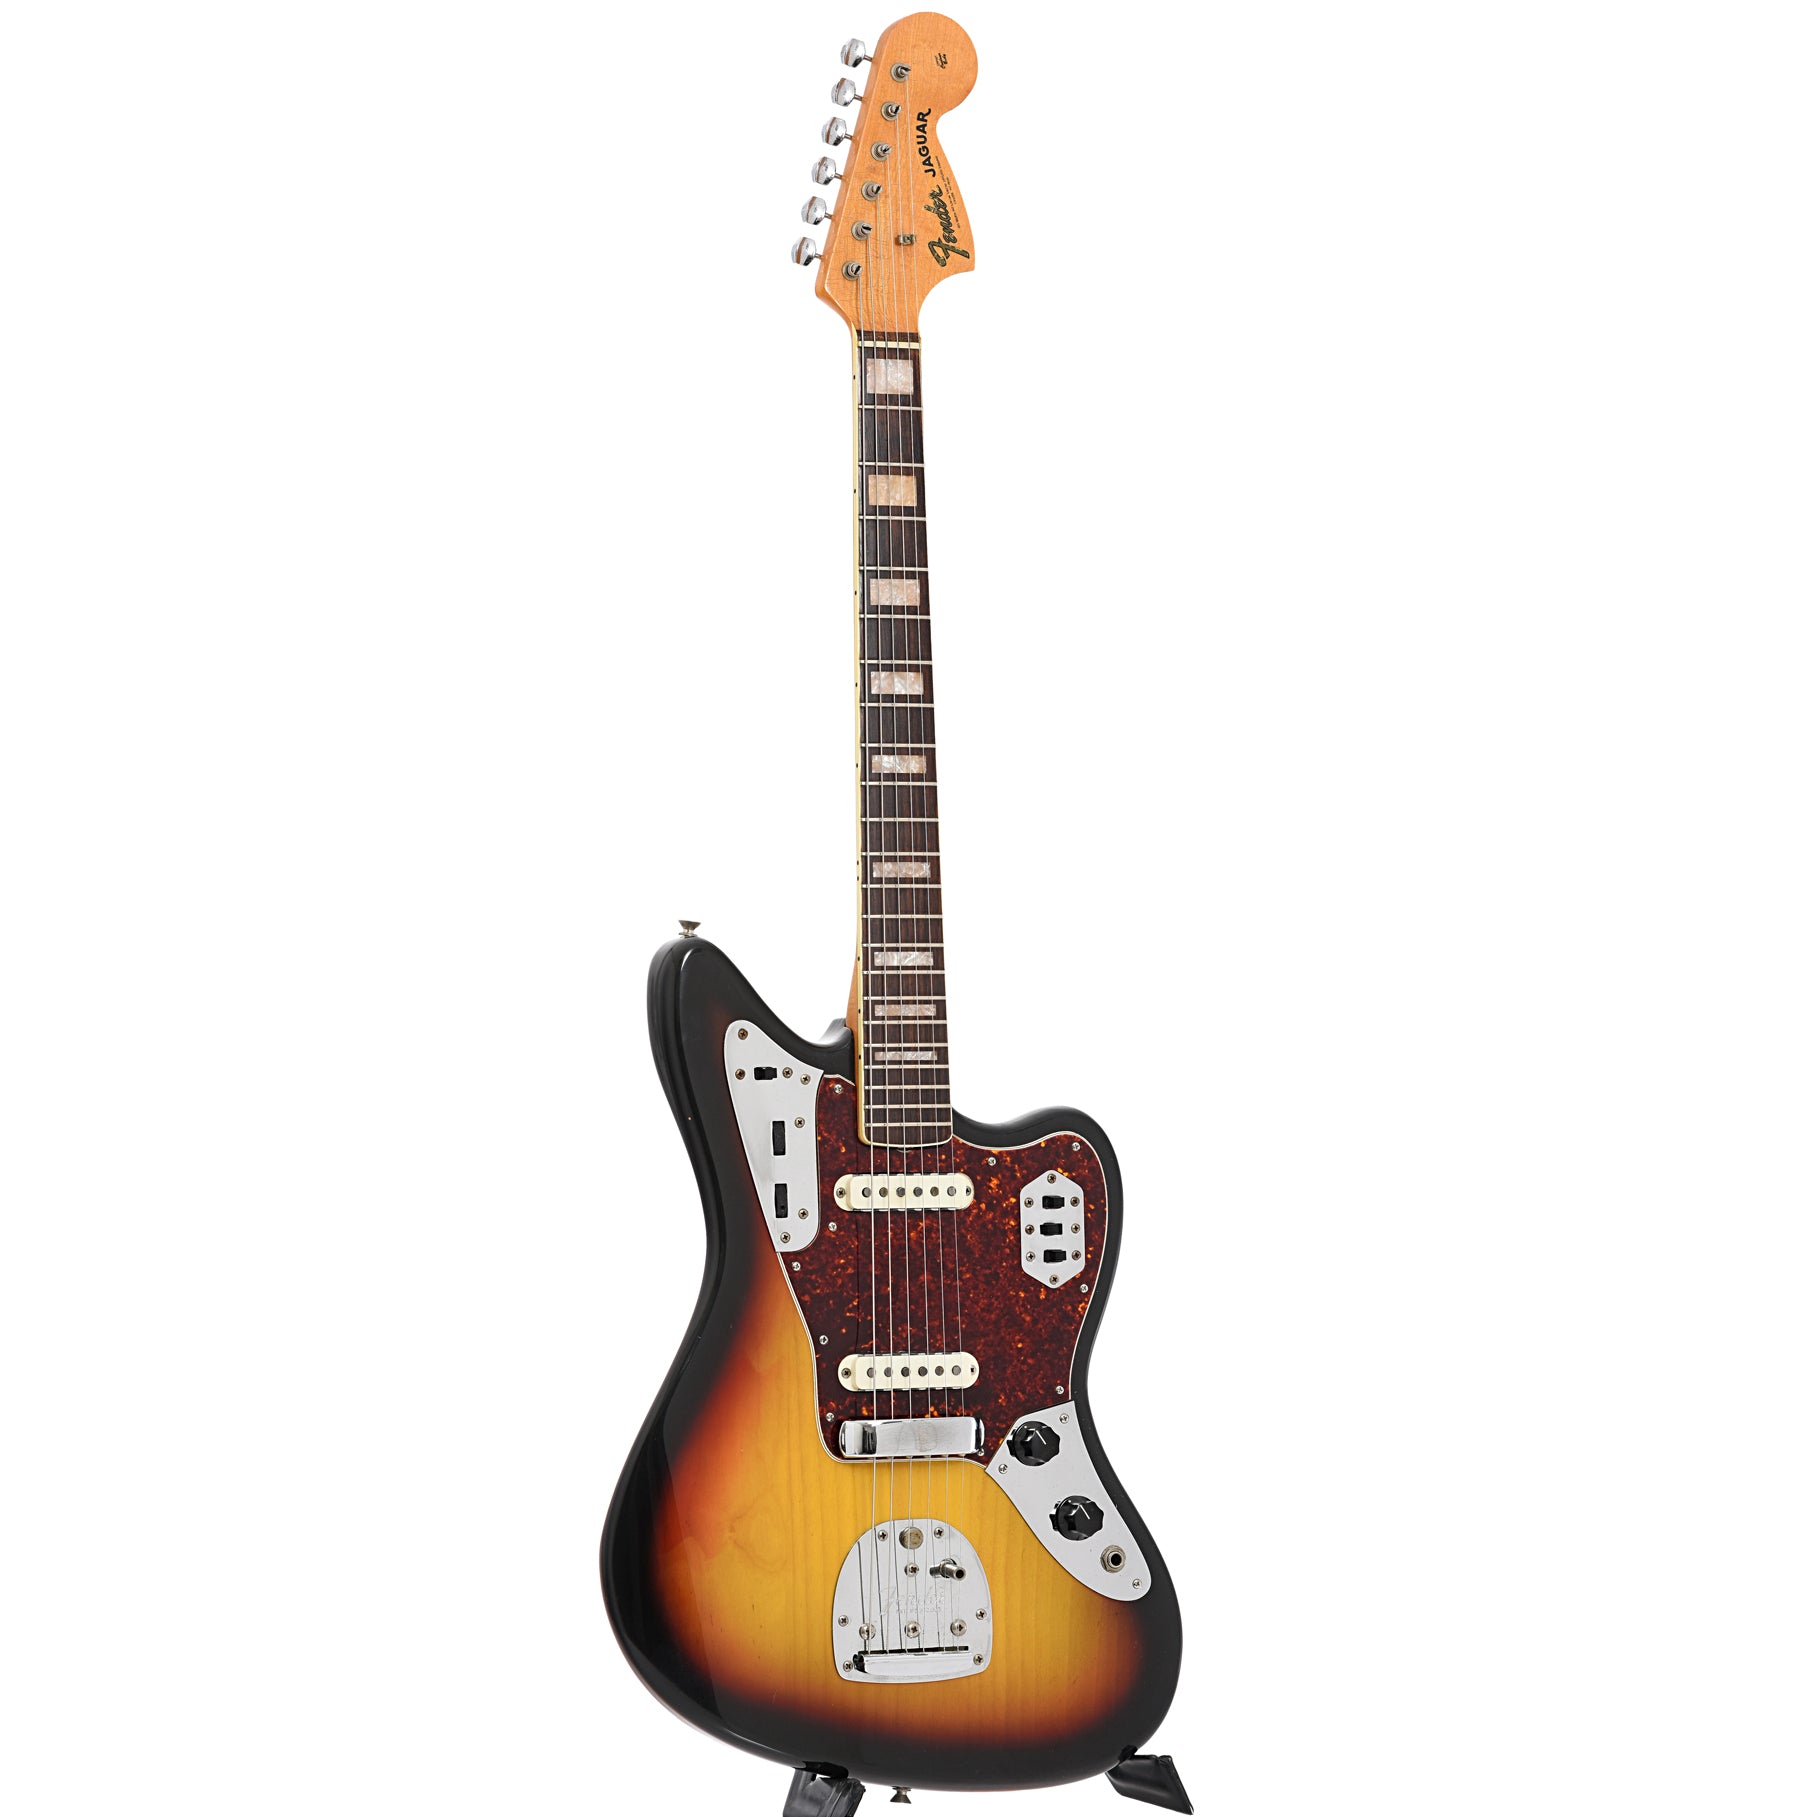 Full front and side of Fender Jaguar Electric Guitar (1967)